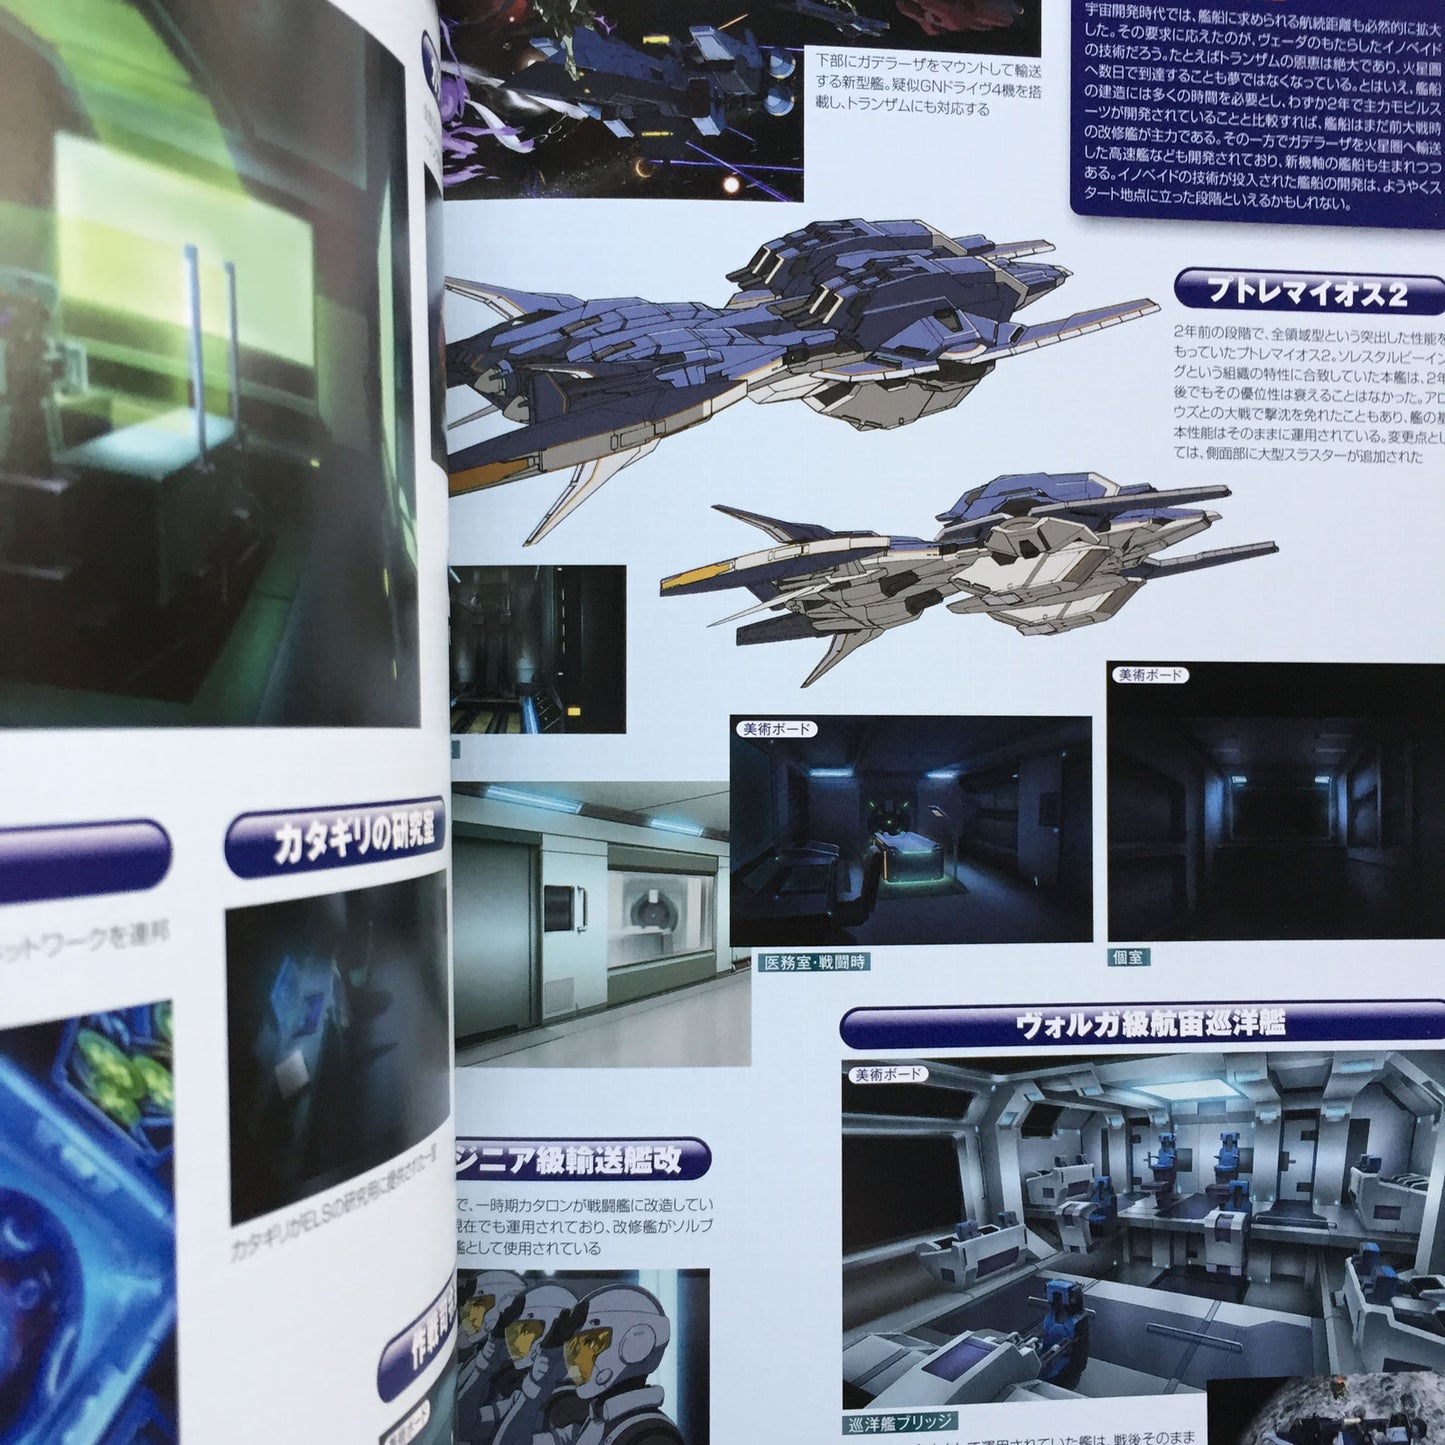 Mobile Suit Gundam 00 The Movie Awakening of the Trailblazer Official Guide Book